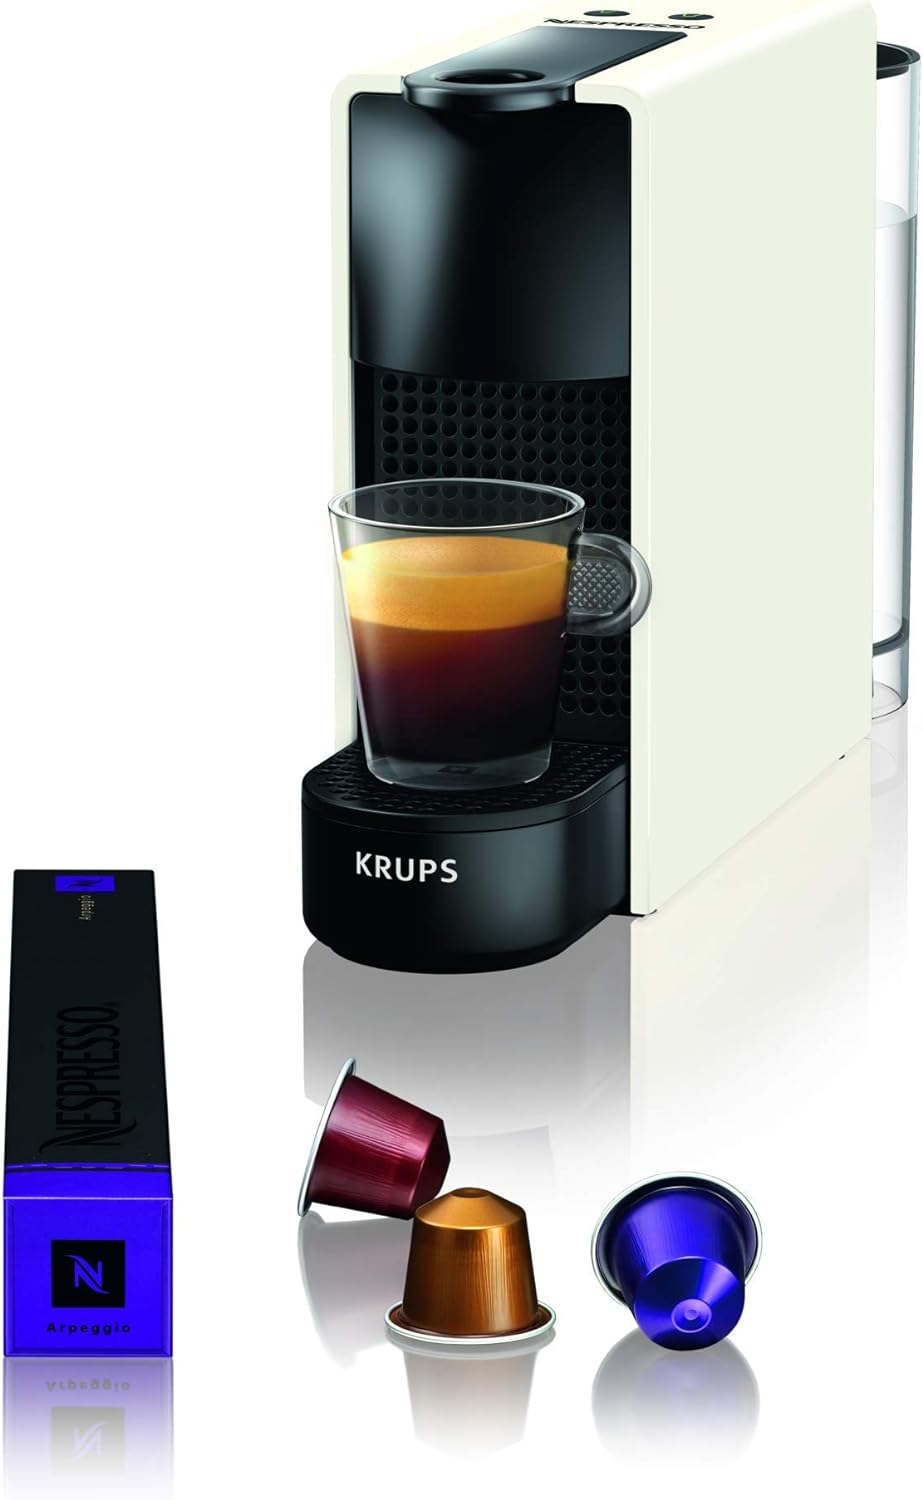 Krups yy2912fd Freestanding Fully Automatic Espresso Machine 0.6L 1tazas Black, White – Coffee (Freestanding, Espresso Machine, 0.6 l, Coffee Capsule, 1200 W, Black, White)